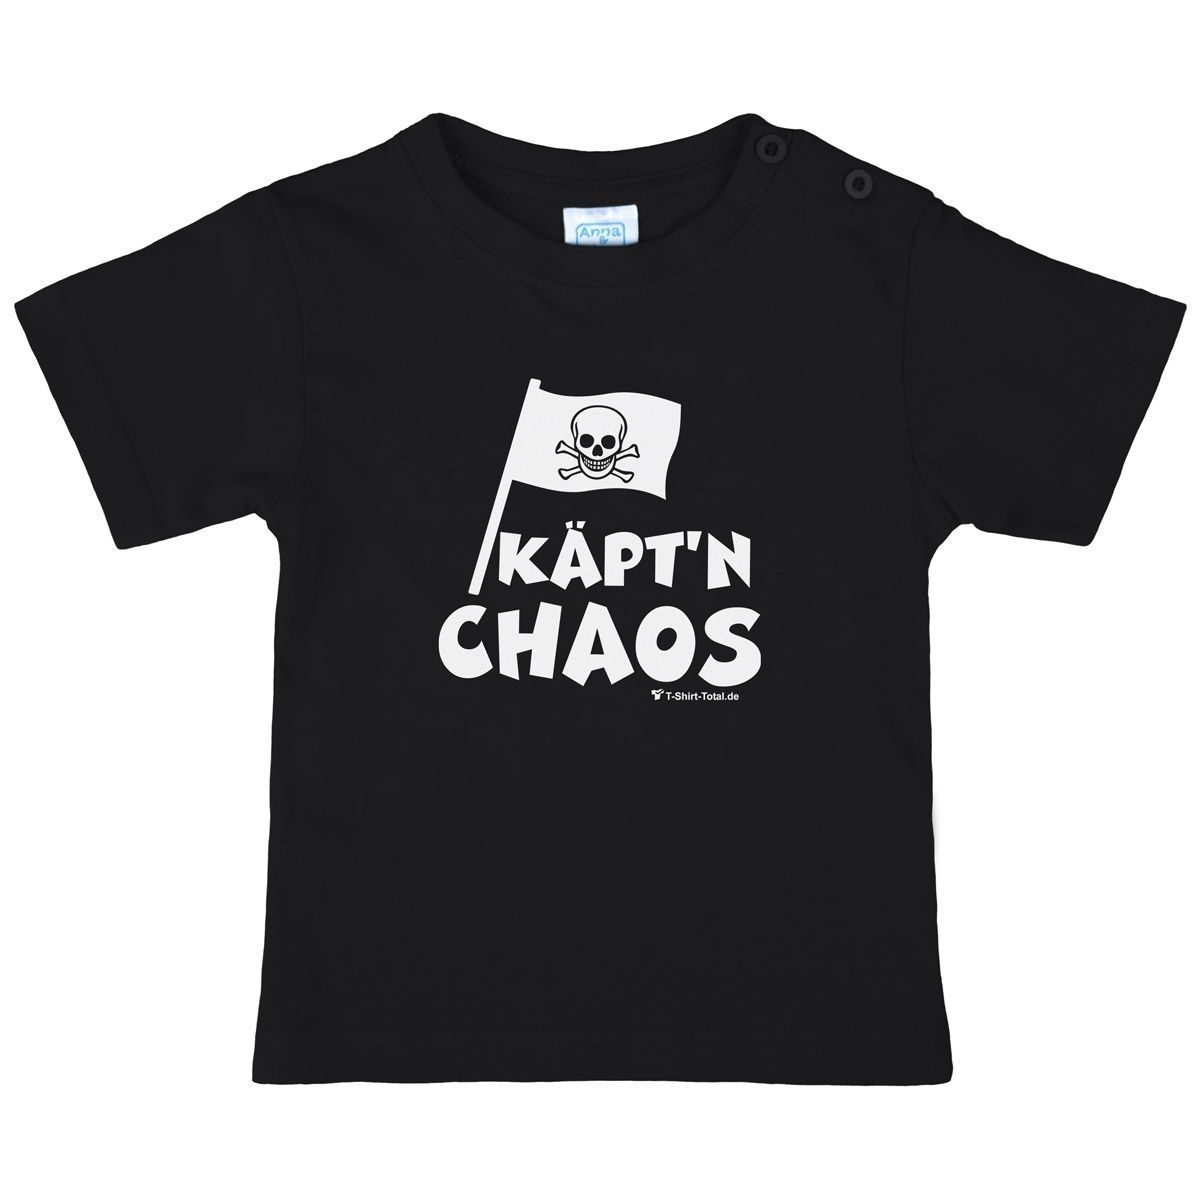 Käptn Chaos Kinder T-Shirt schwarz 104